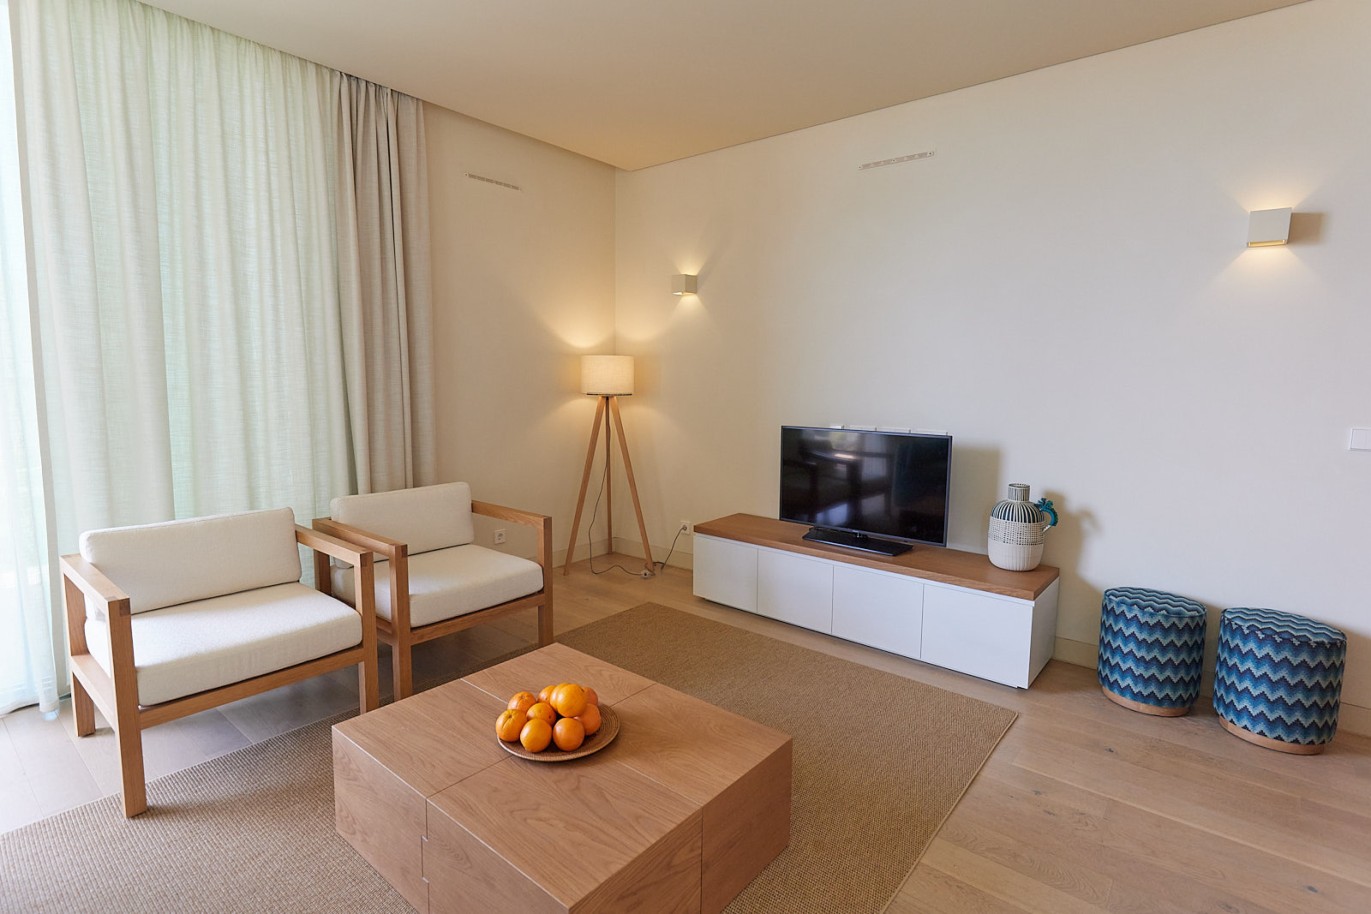 3 bedroom apartment in resort, for sale in Porches, Algarve_230746